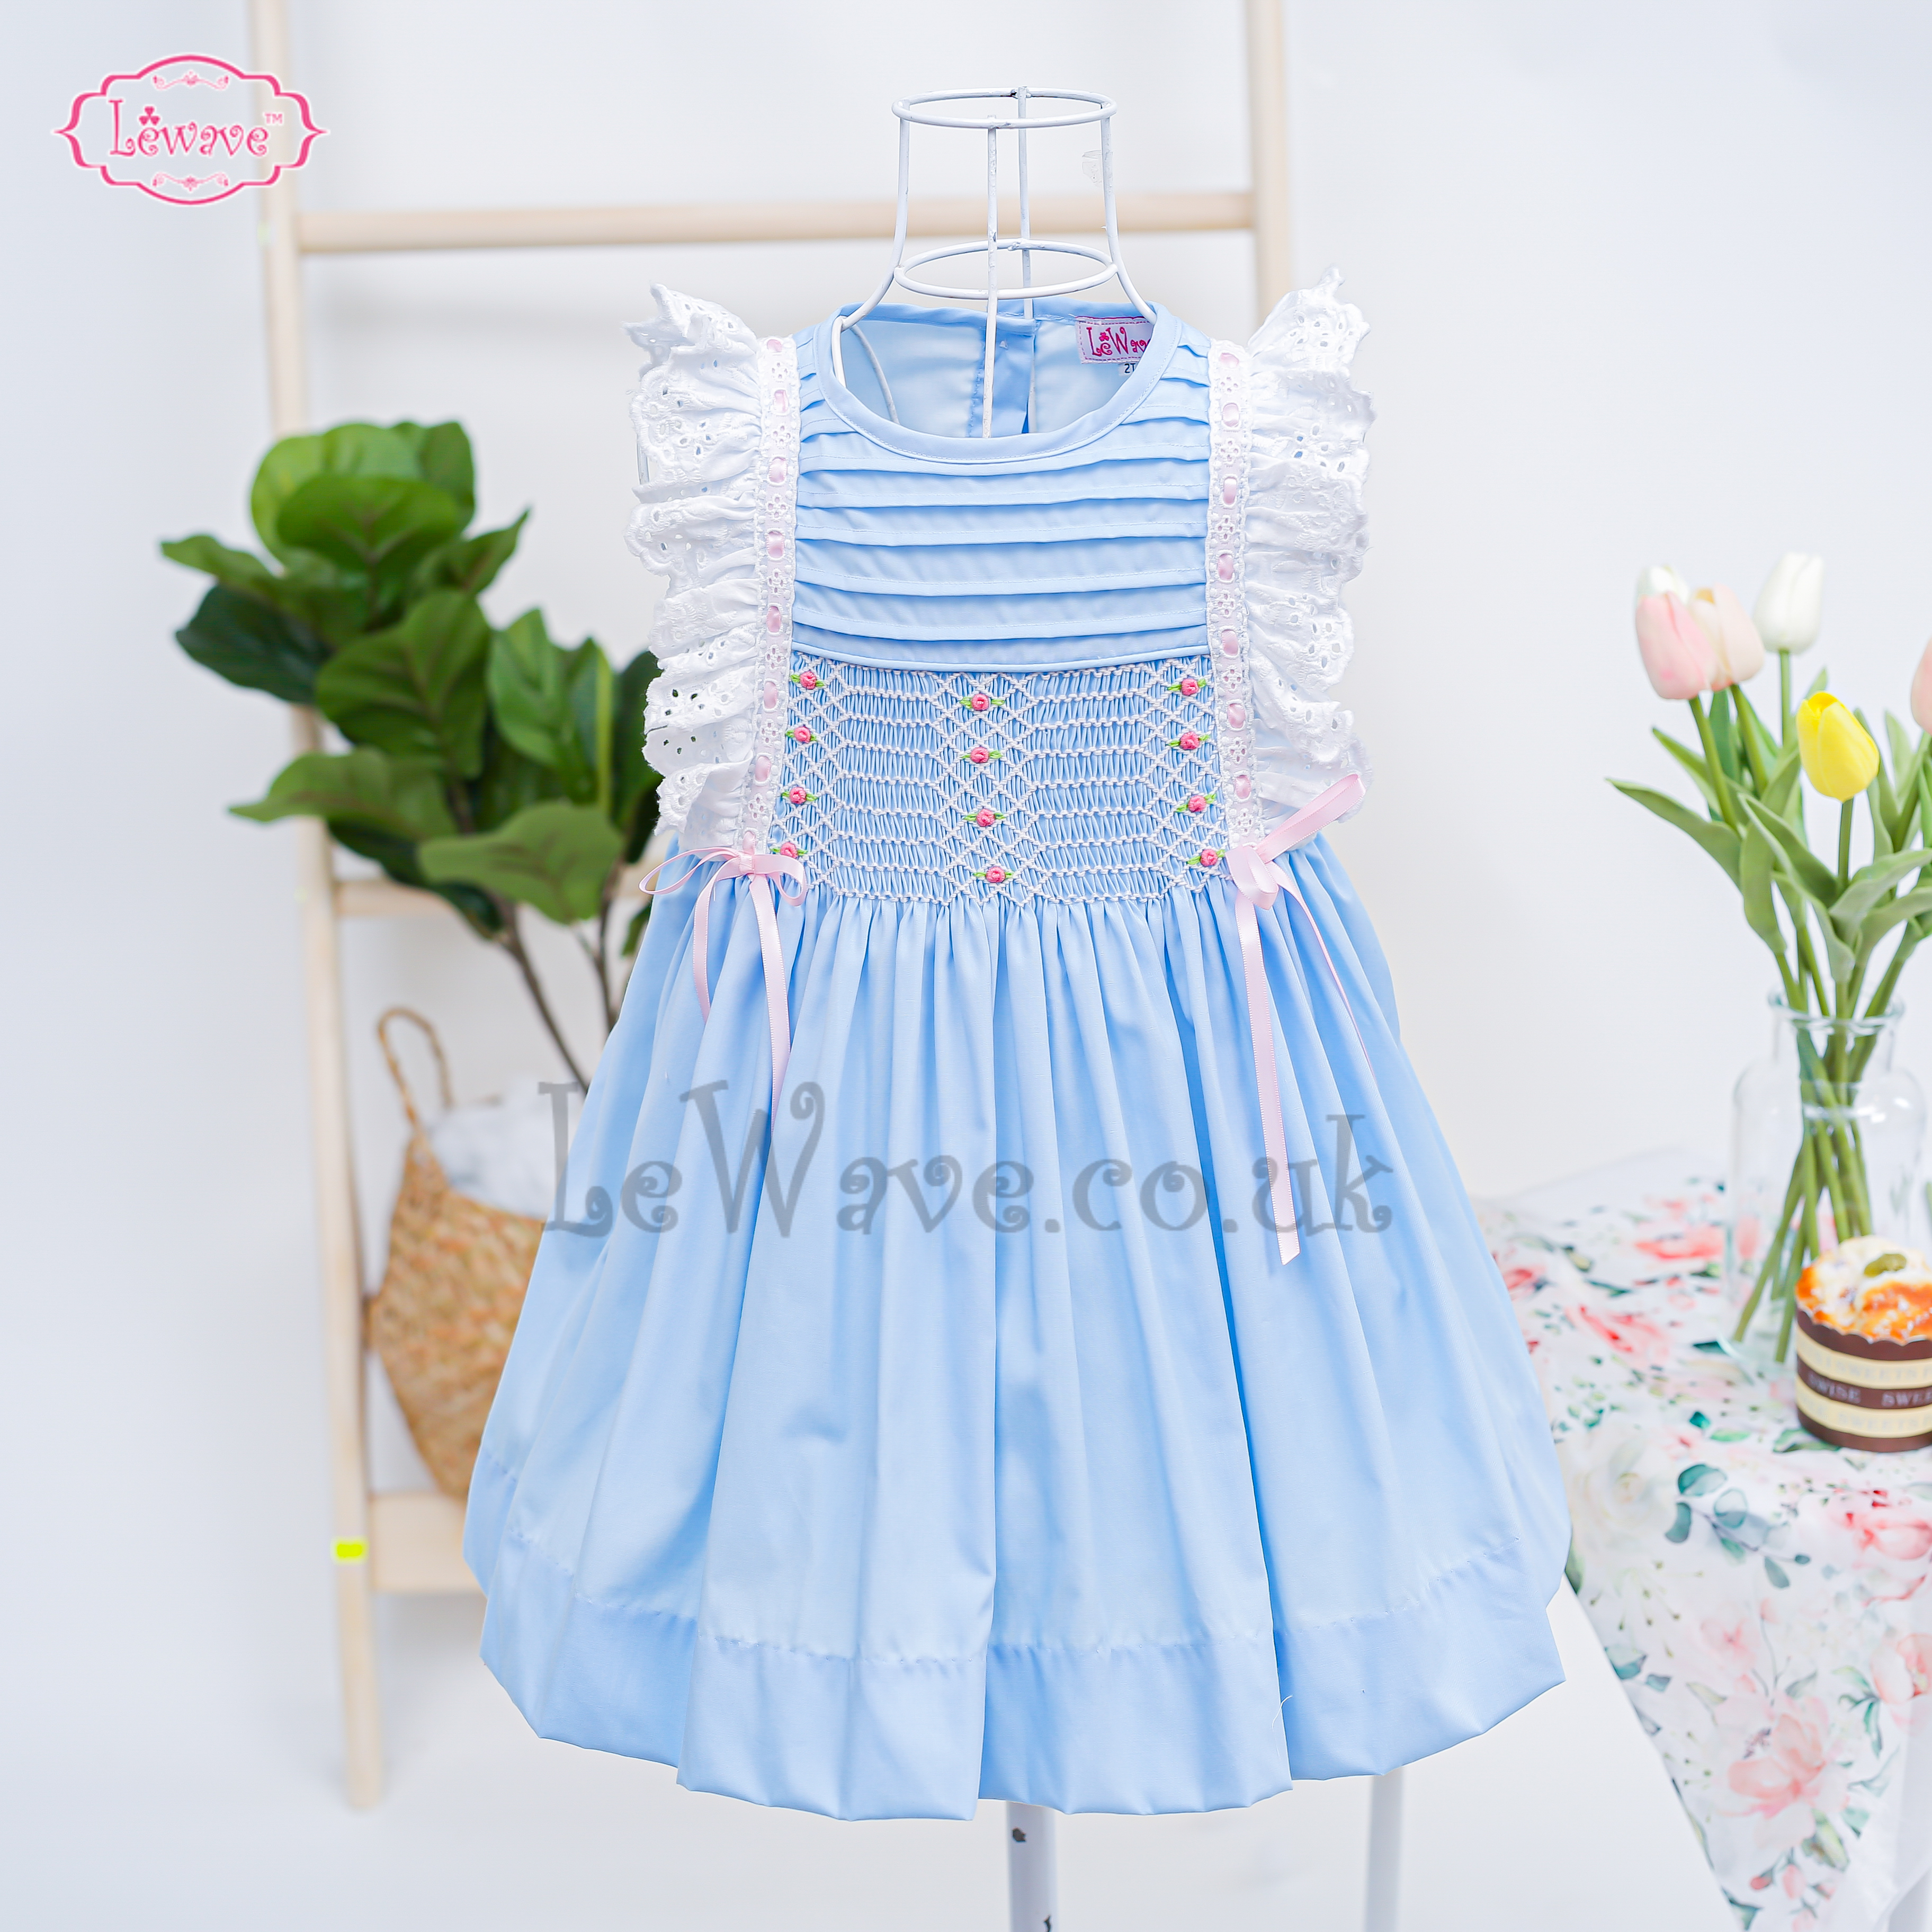 Lovely little girl laces pintuck blue dress - LD 434